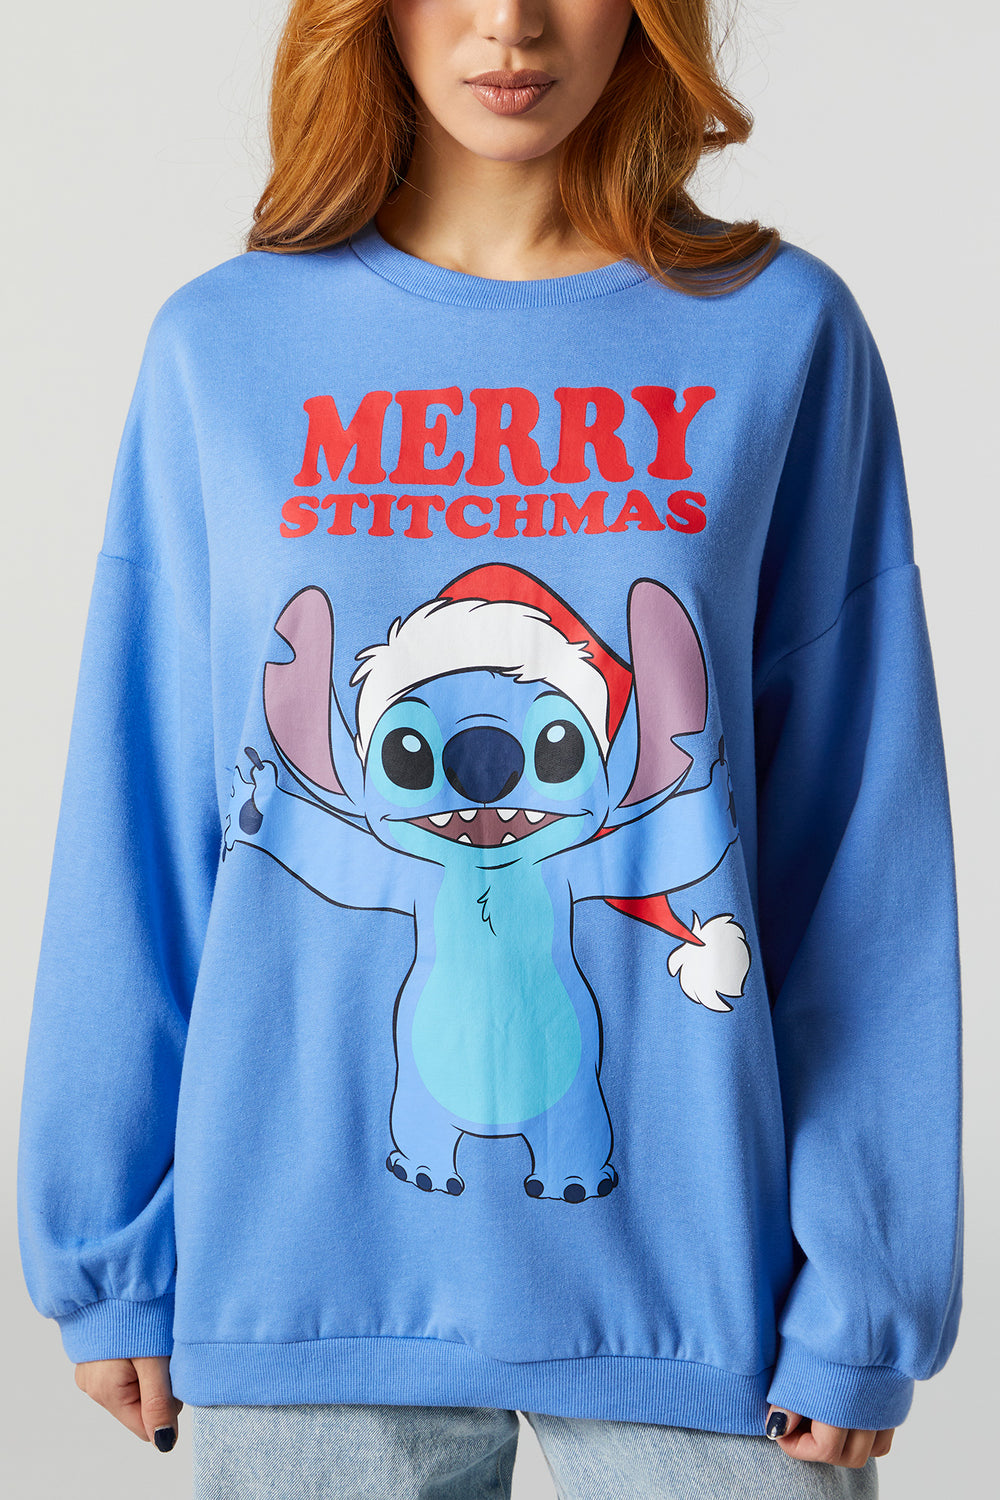 Merry Stitchmas Graphic Fleece Sweatshirt Merry Stitchmas Graphic Fleece Sweatshirt 2